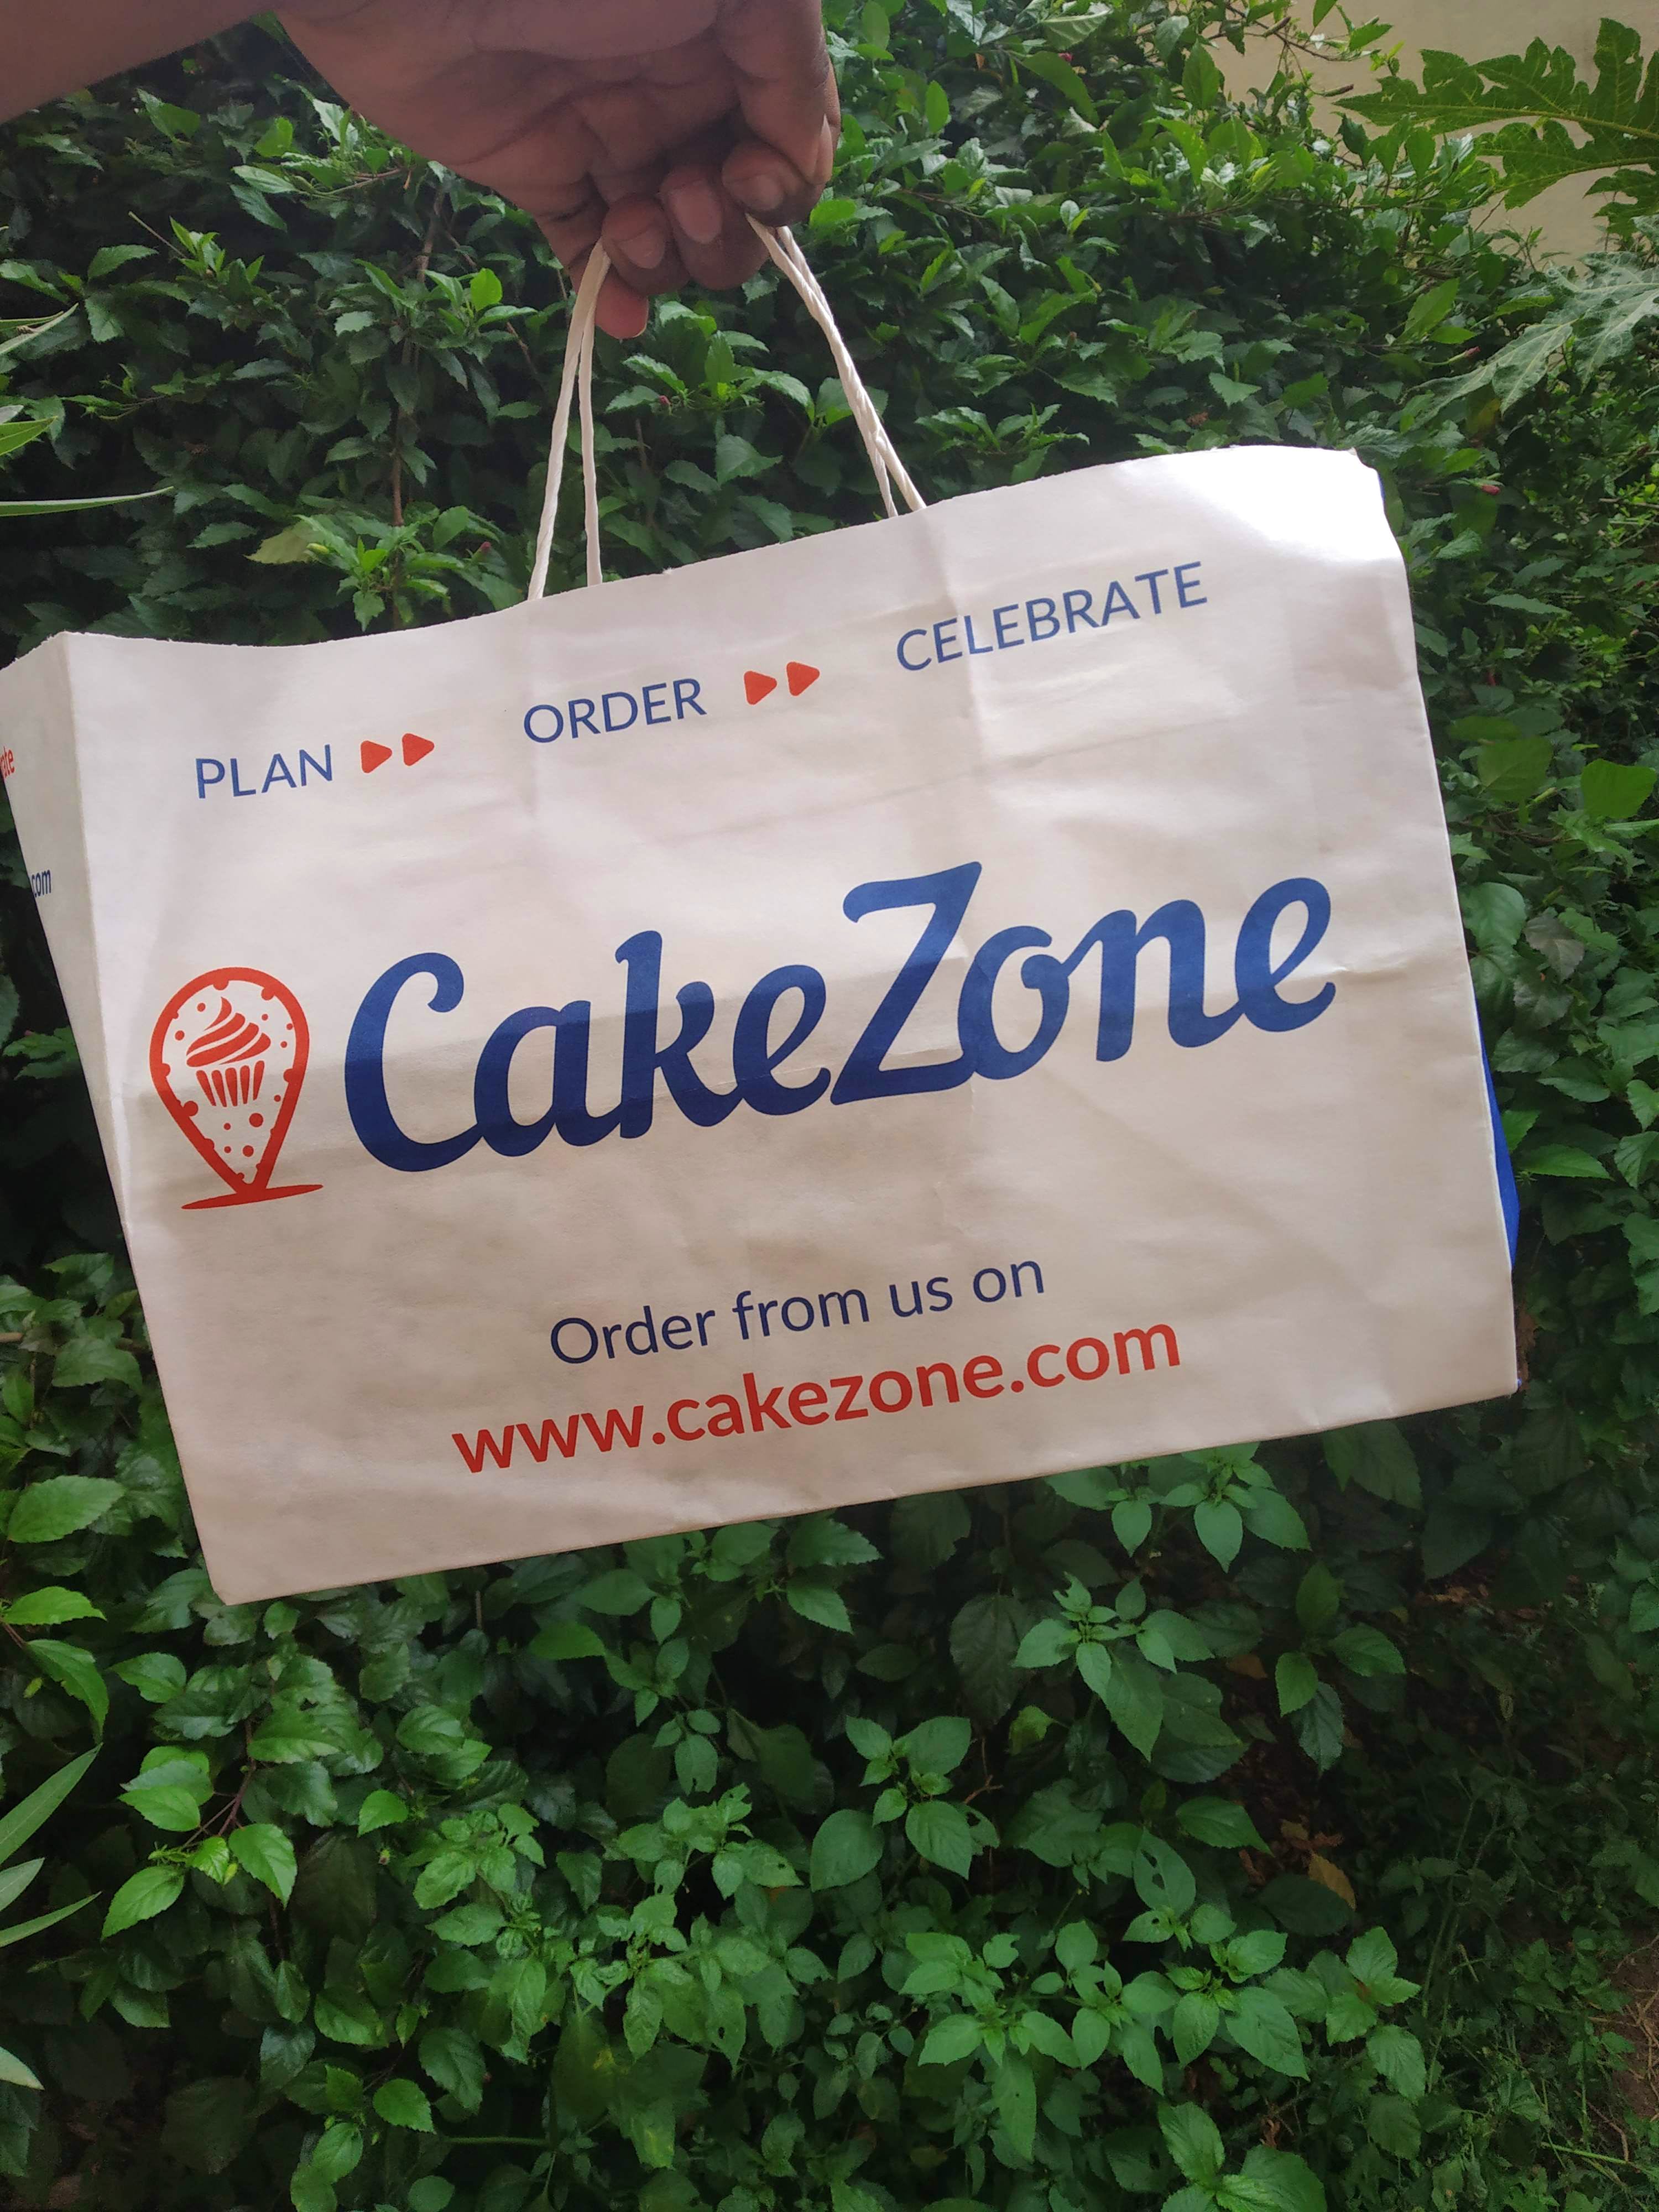 CAKE ZONE - INDIRANAGAR - BANGALORE Menu, Photos, Images and Wallpapers -  MouthShut.com